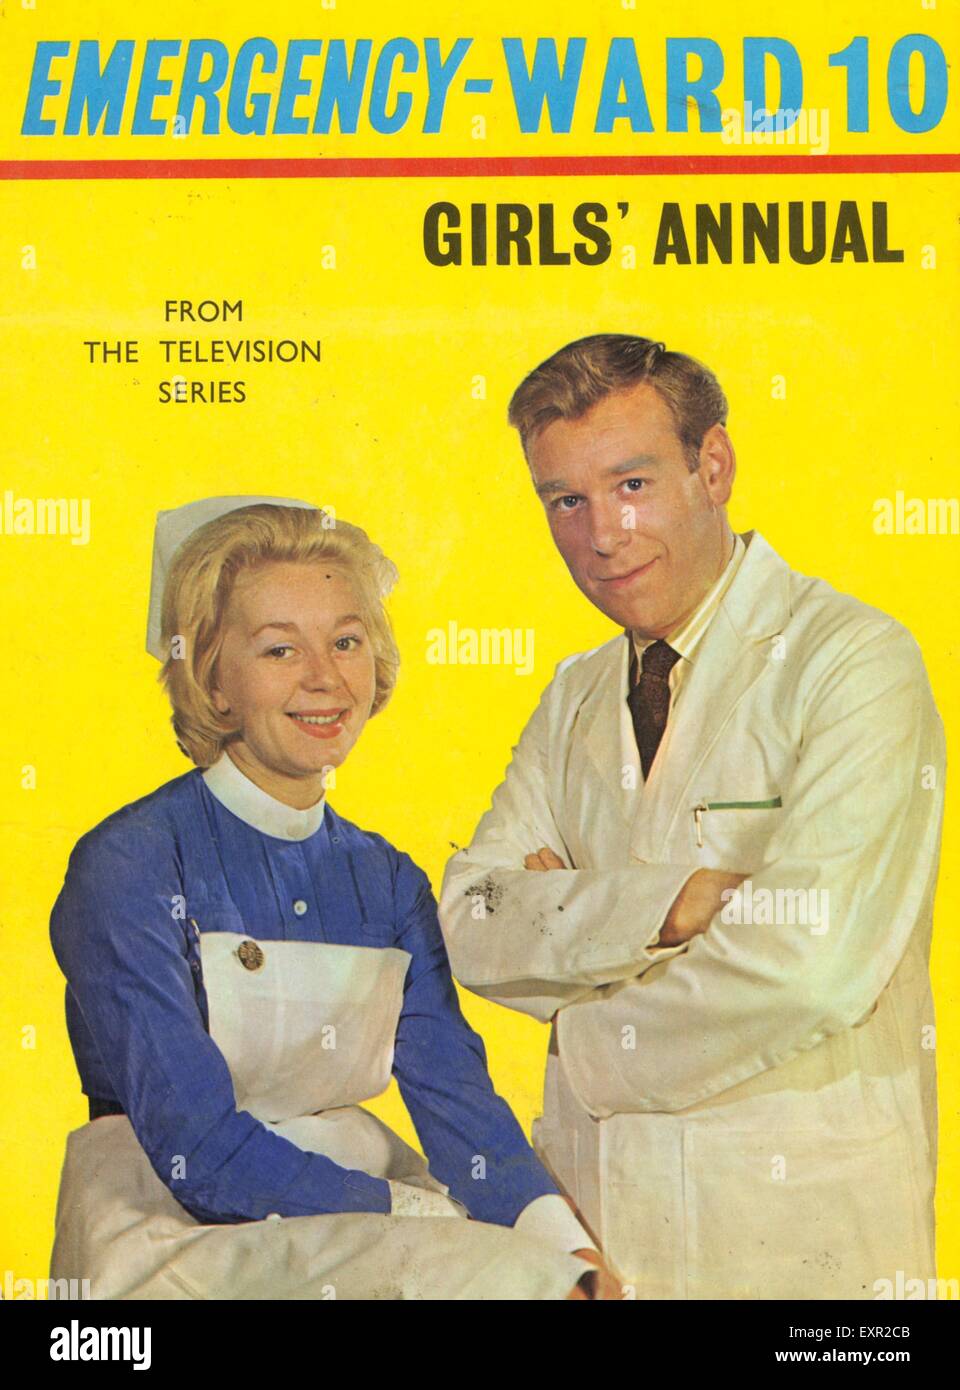 1960s UK Emergency-Ward 10 Girls' Annual Comic/ Annual Cover Stock Photo